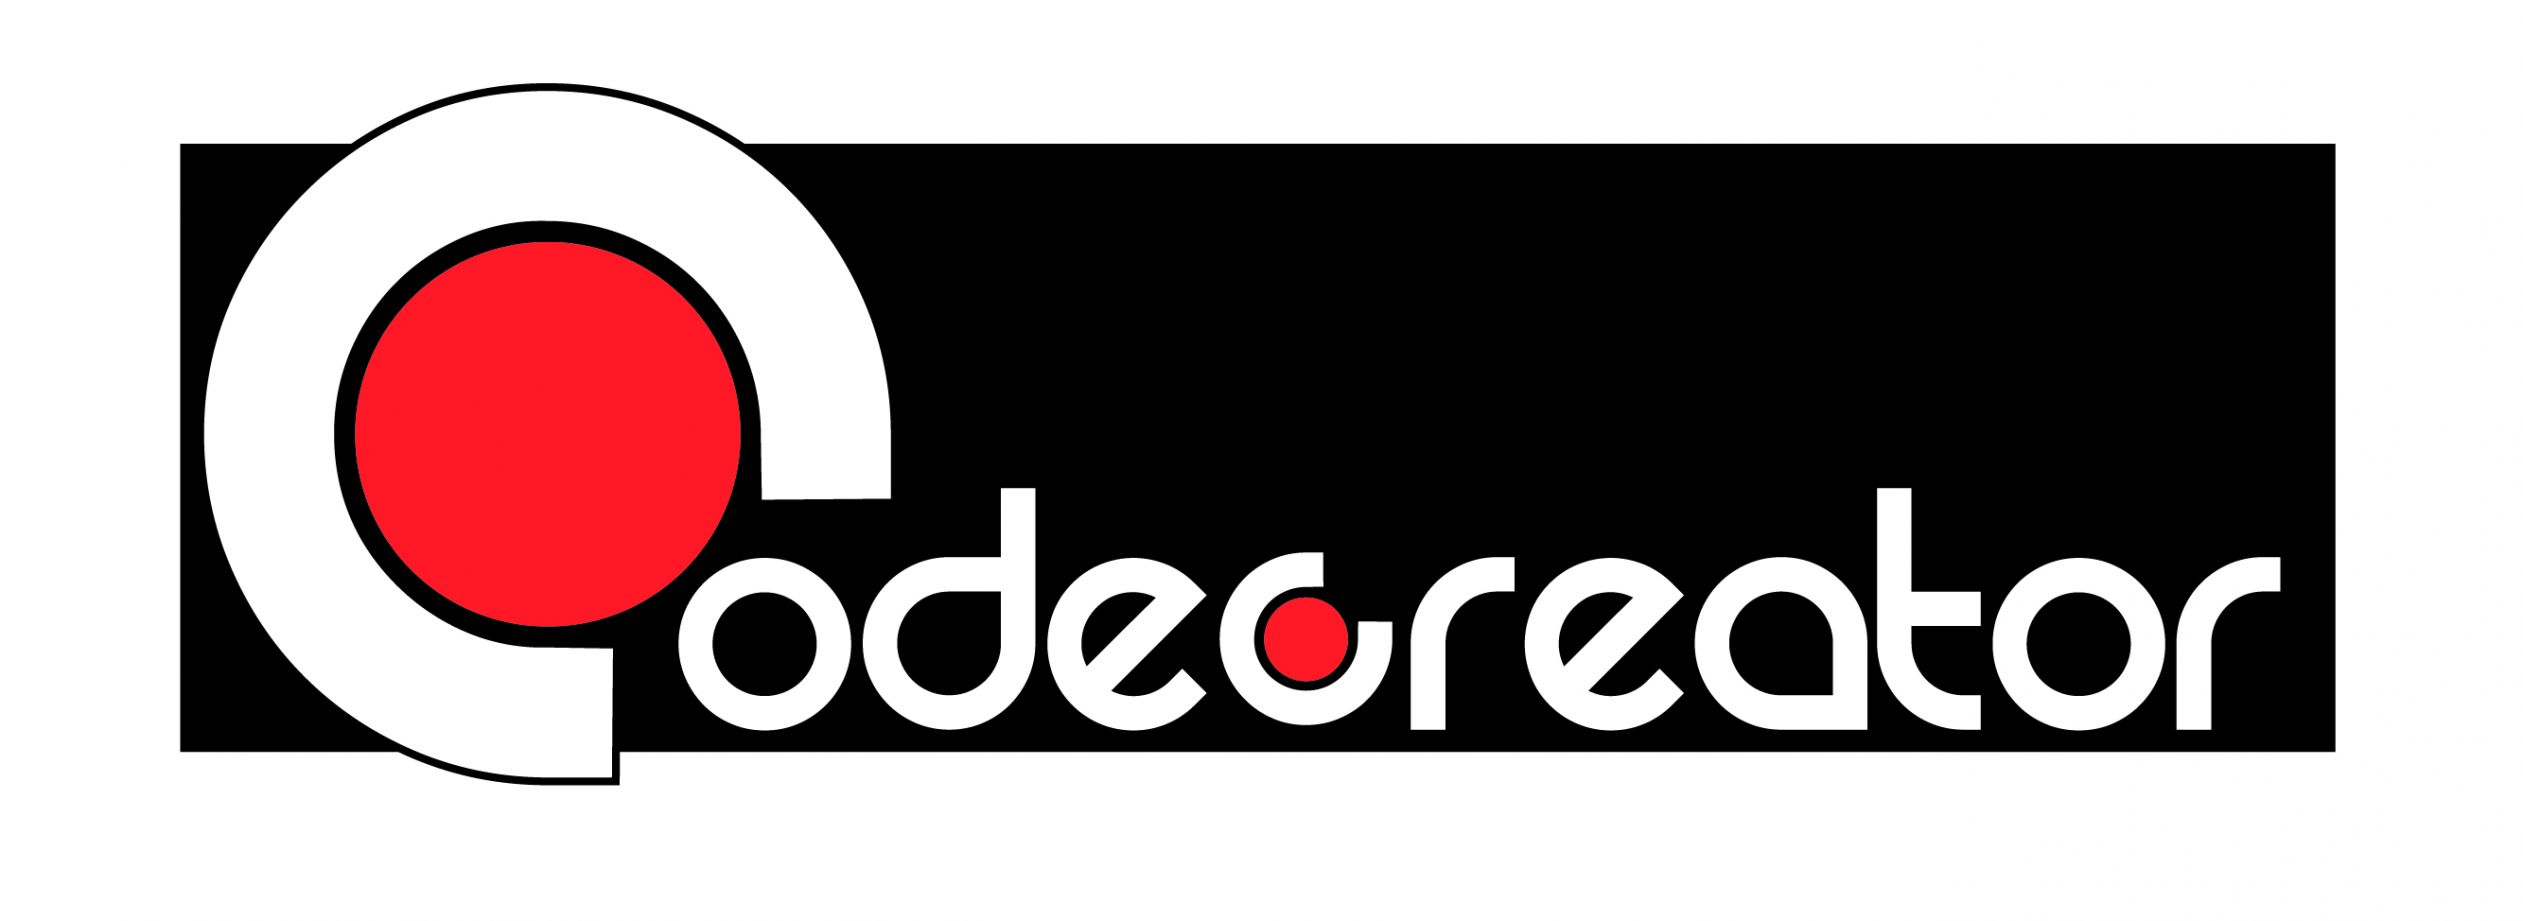 codecreator Logo